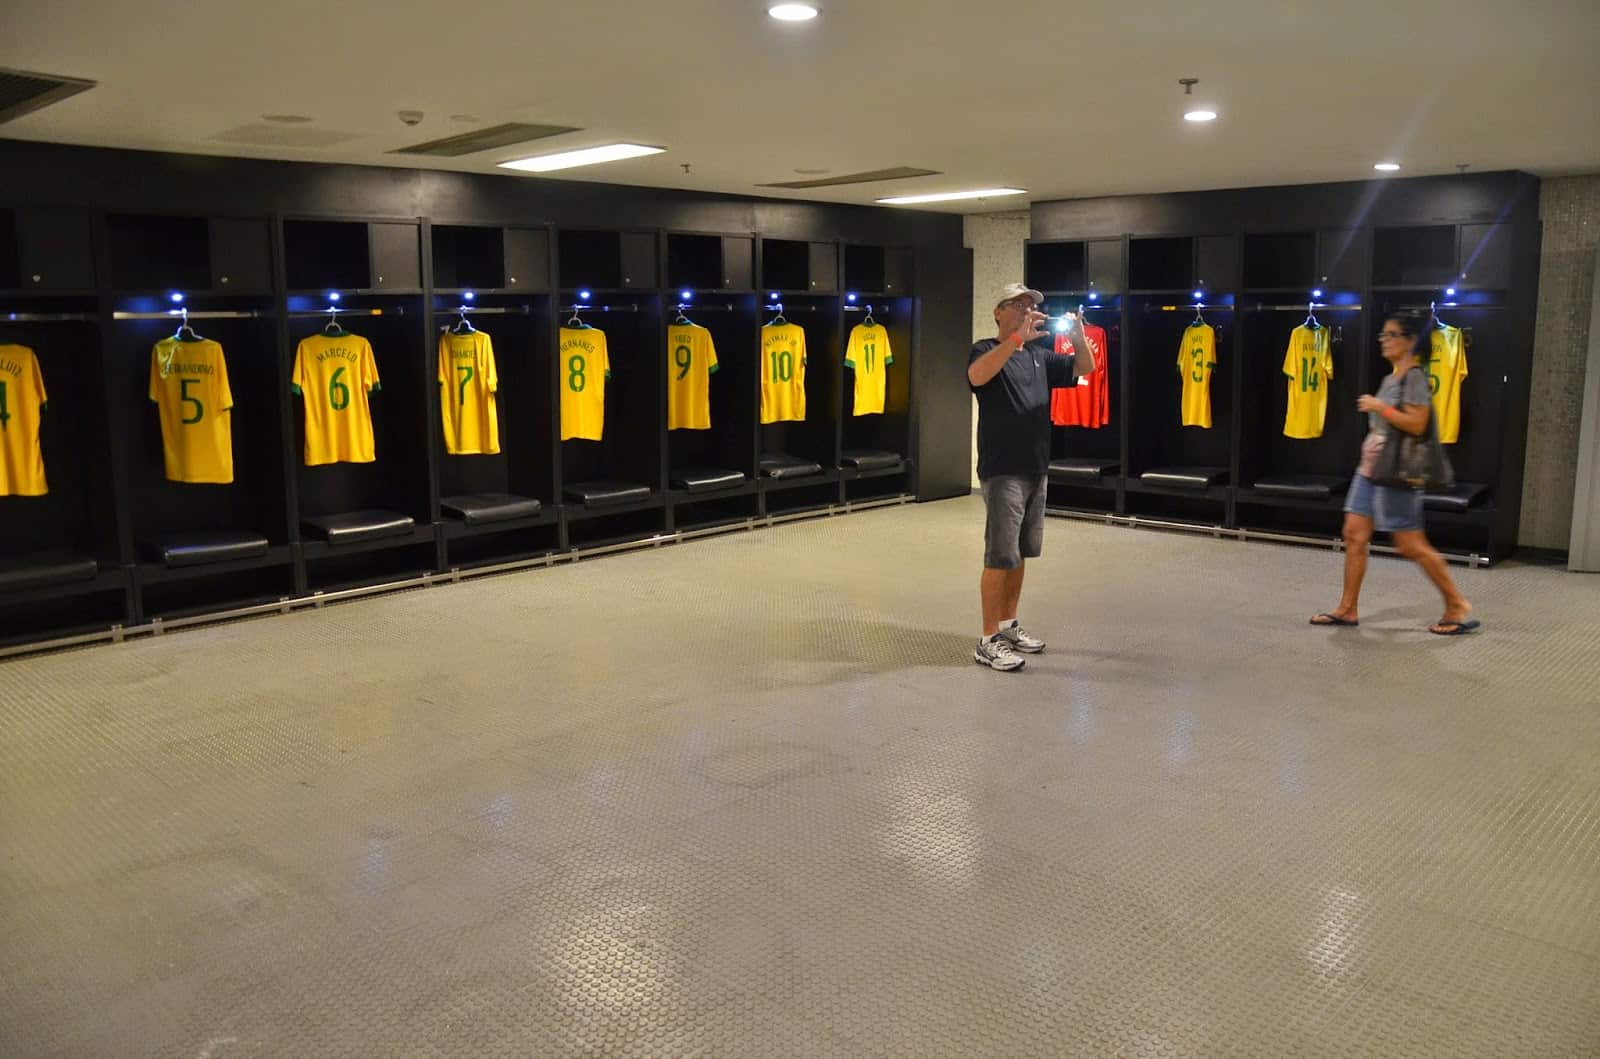 Brazilian national team locker room at Estádio do Maracanã in Rio de Janeiro, Brazil